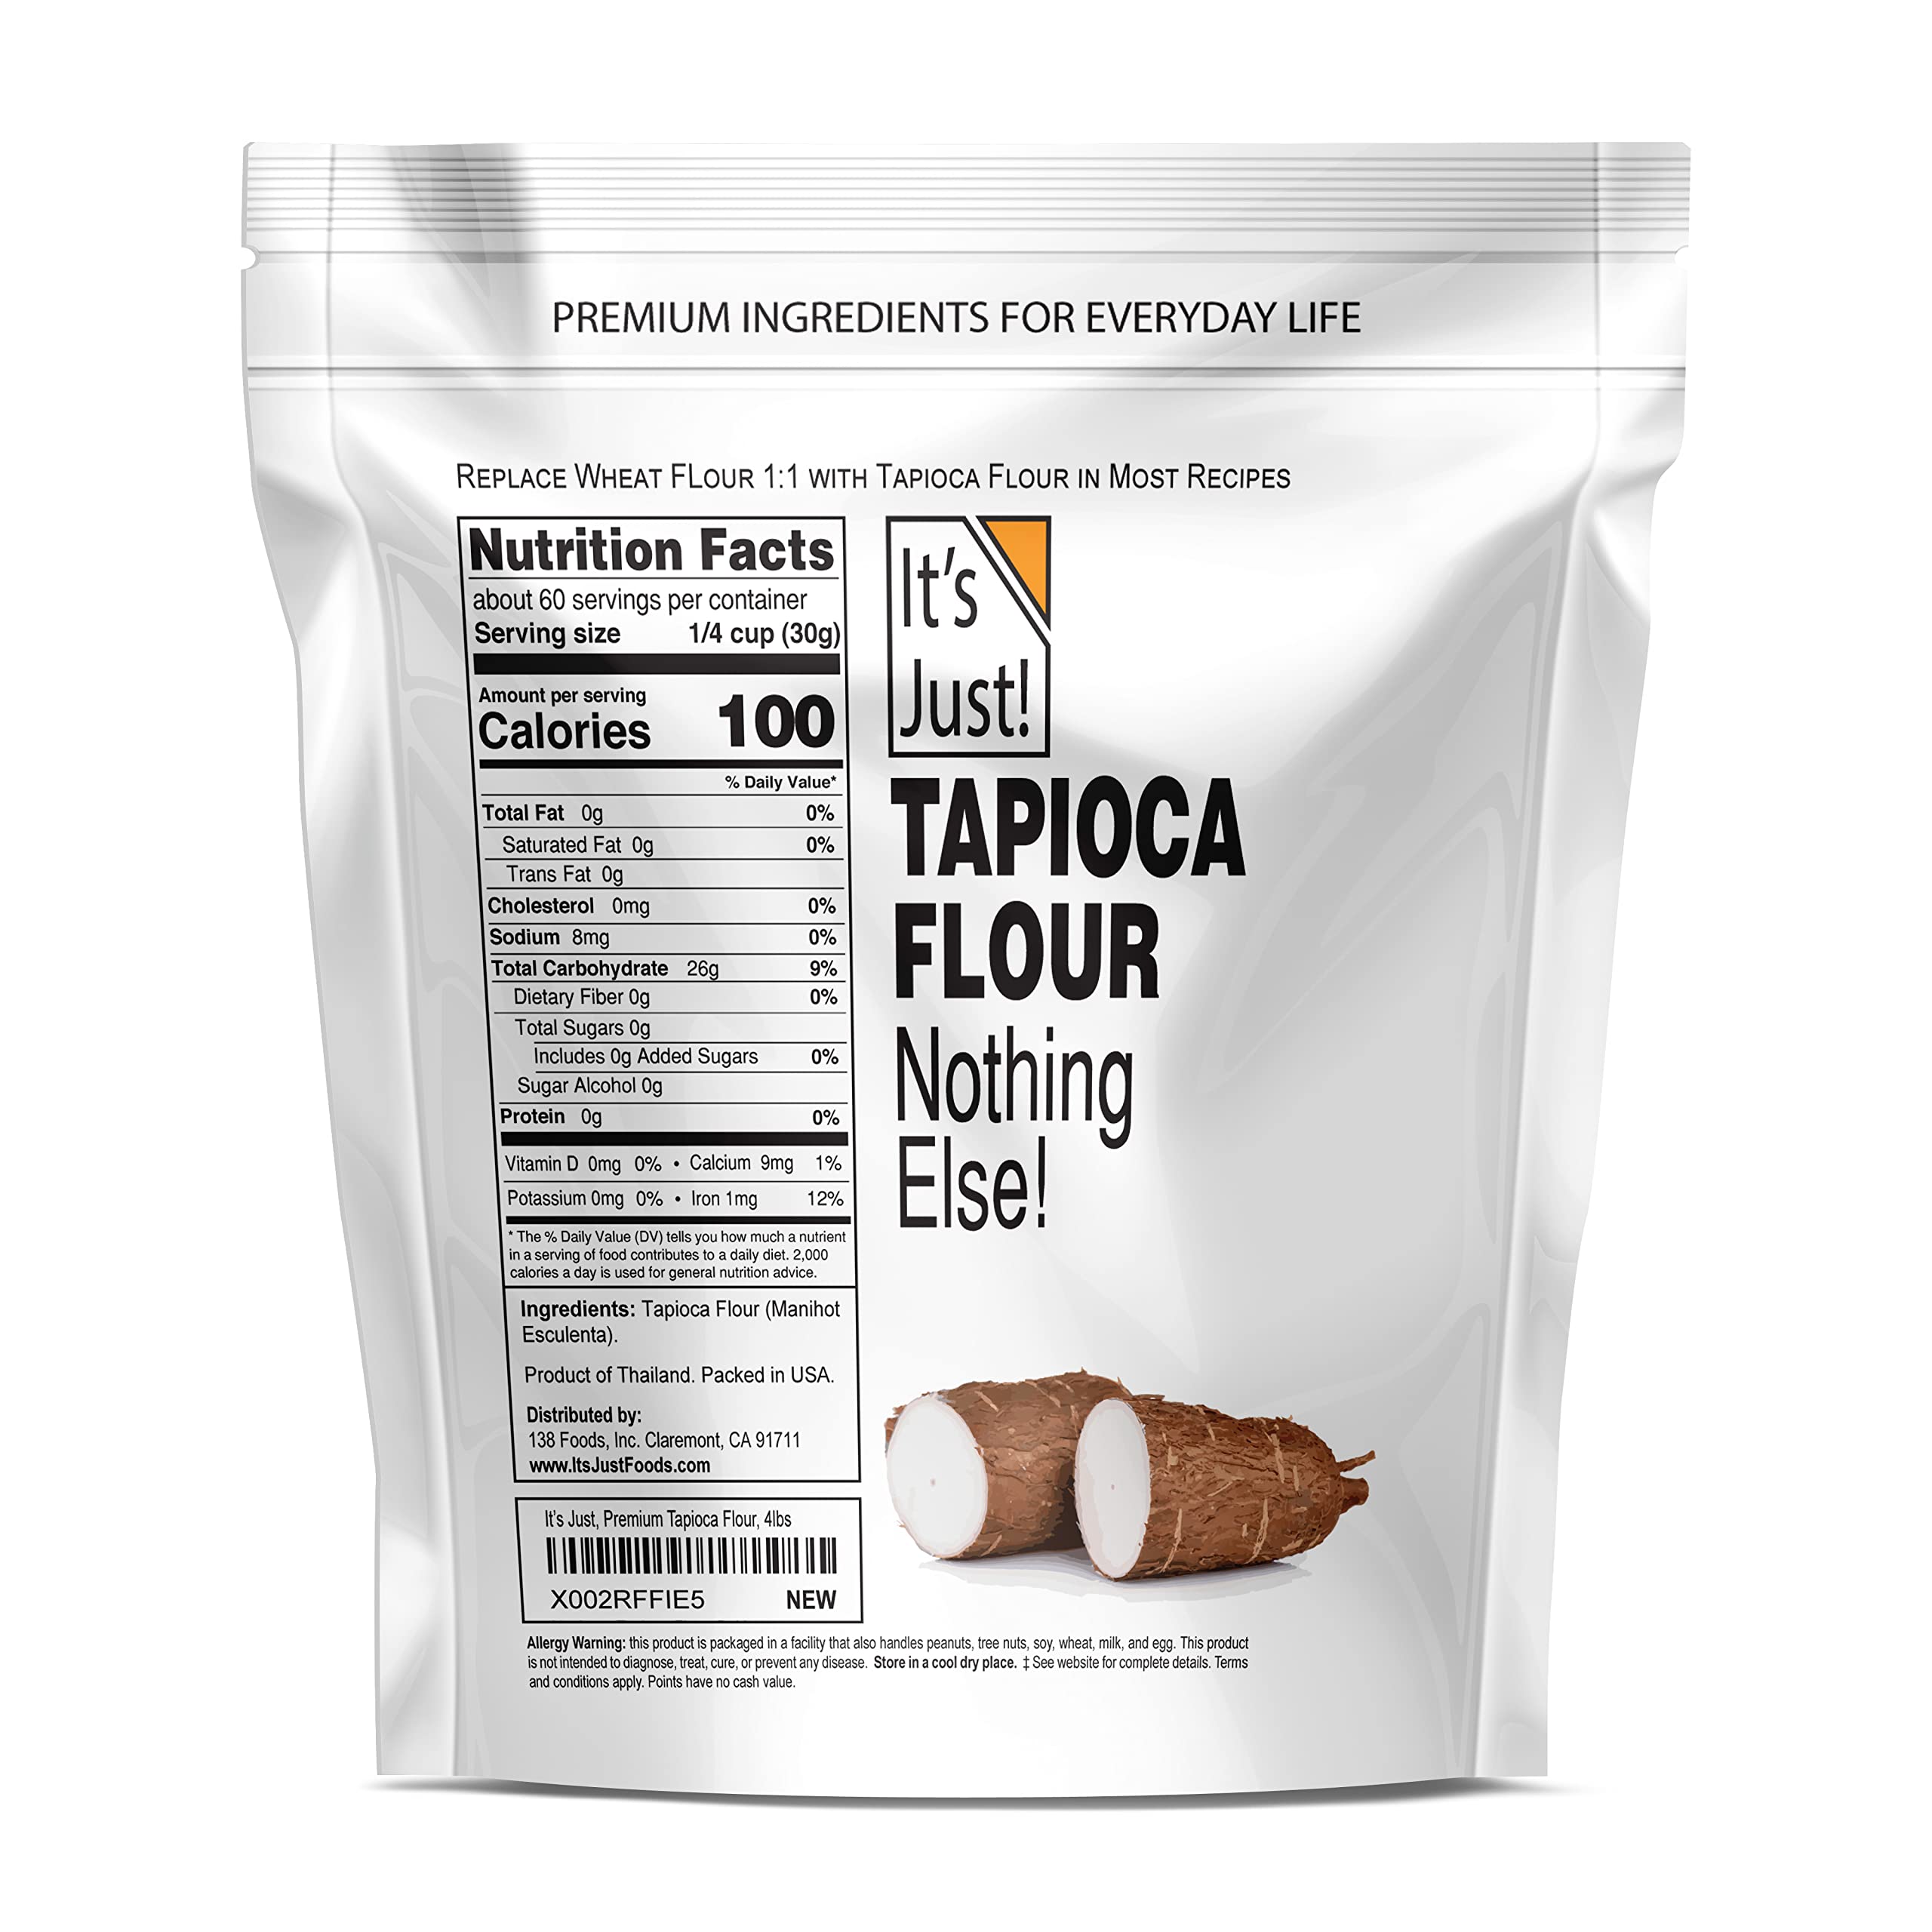 It's Just - Tapioca Flour (Starch), Natural Thickener, Non-GMO, Gluten Substitute, 4lbs